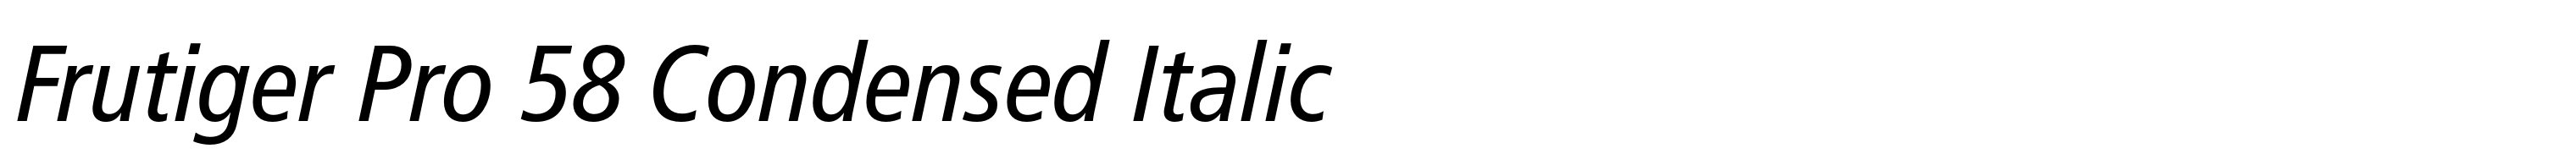 Frutiger Pro 58 Condensed Italic